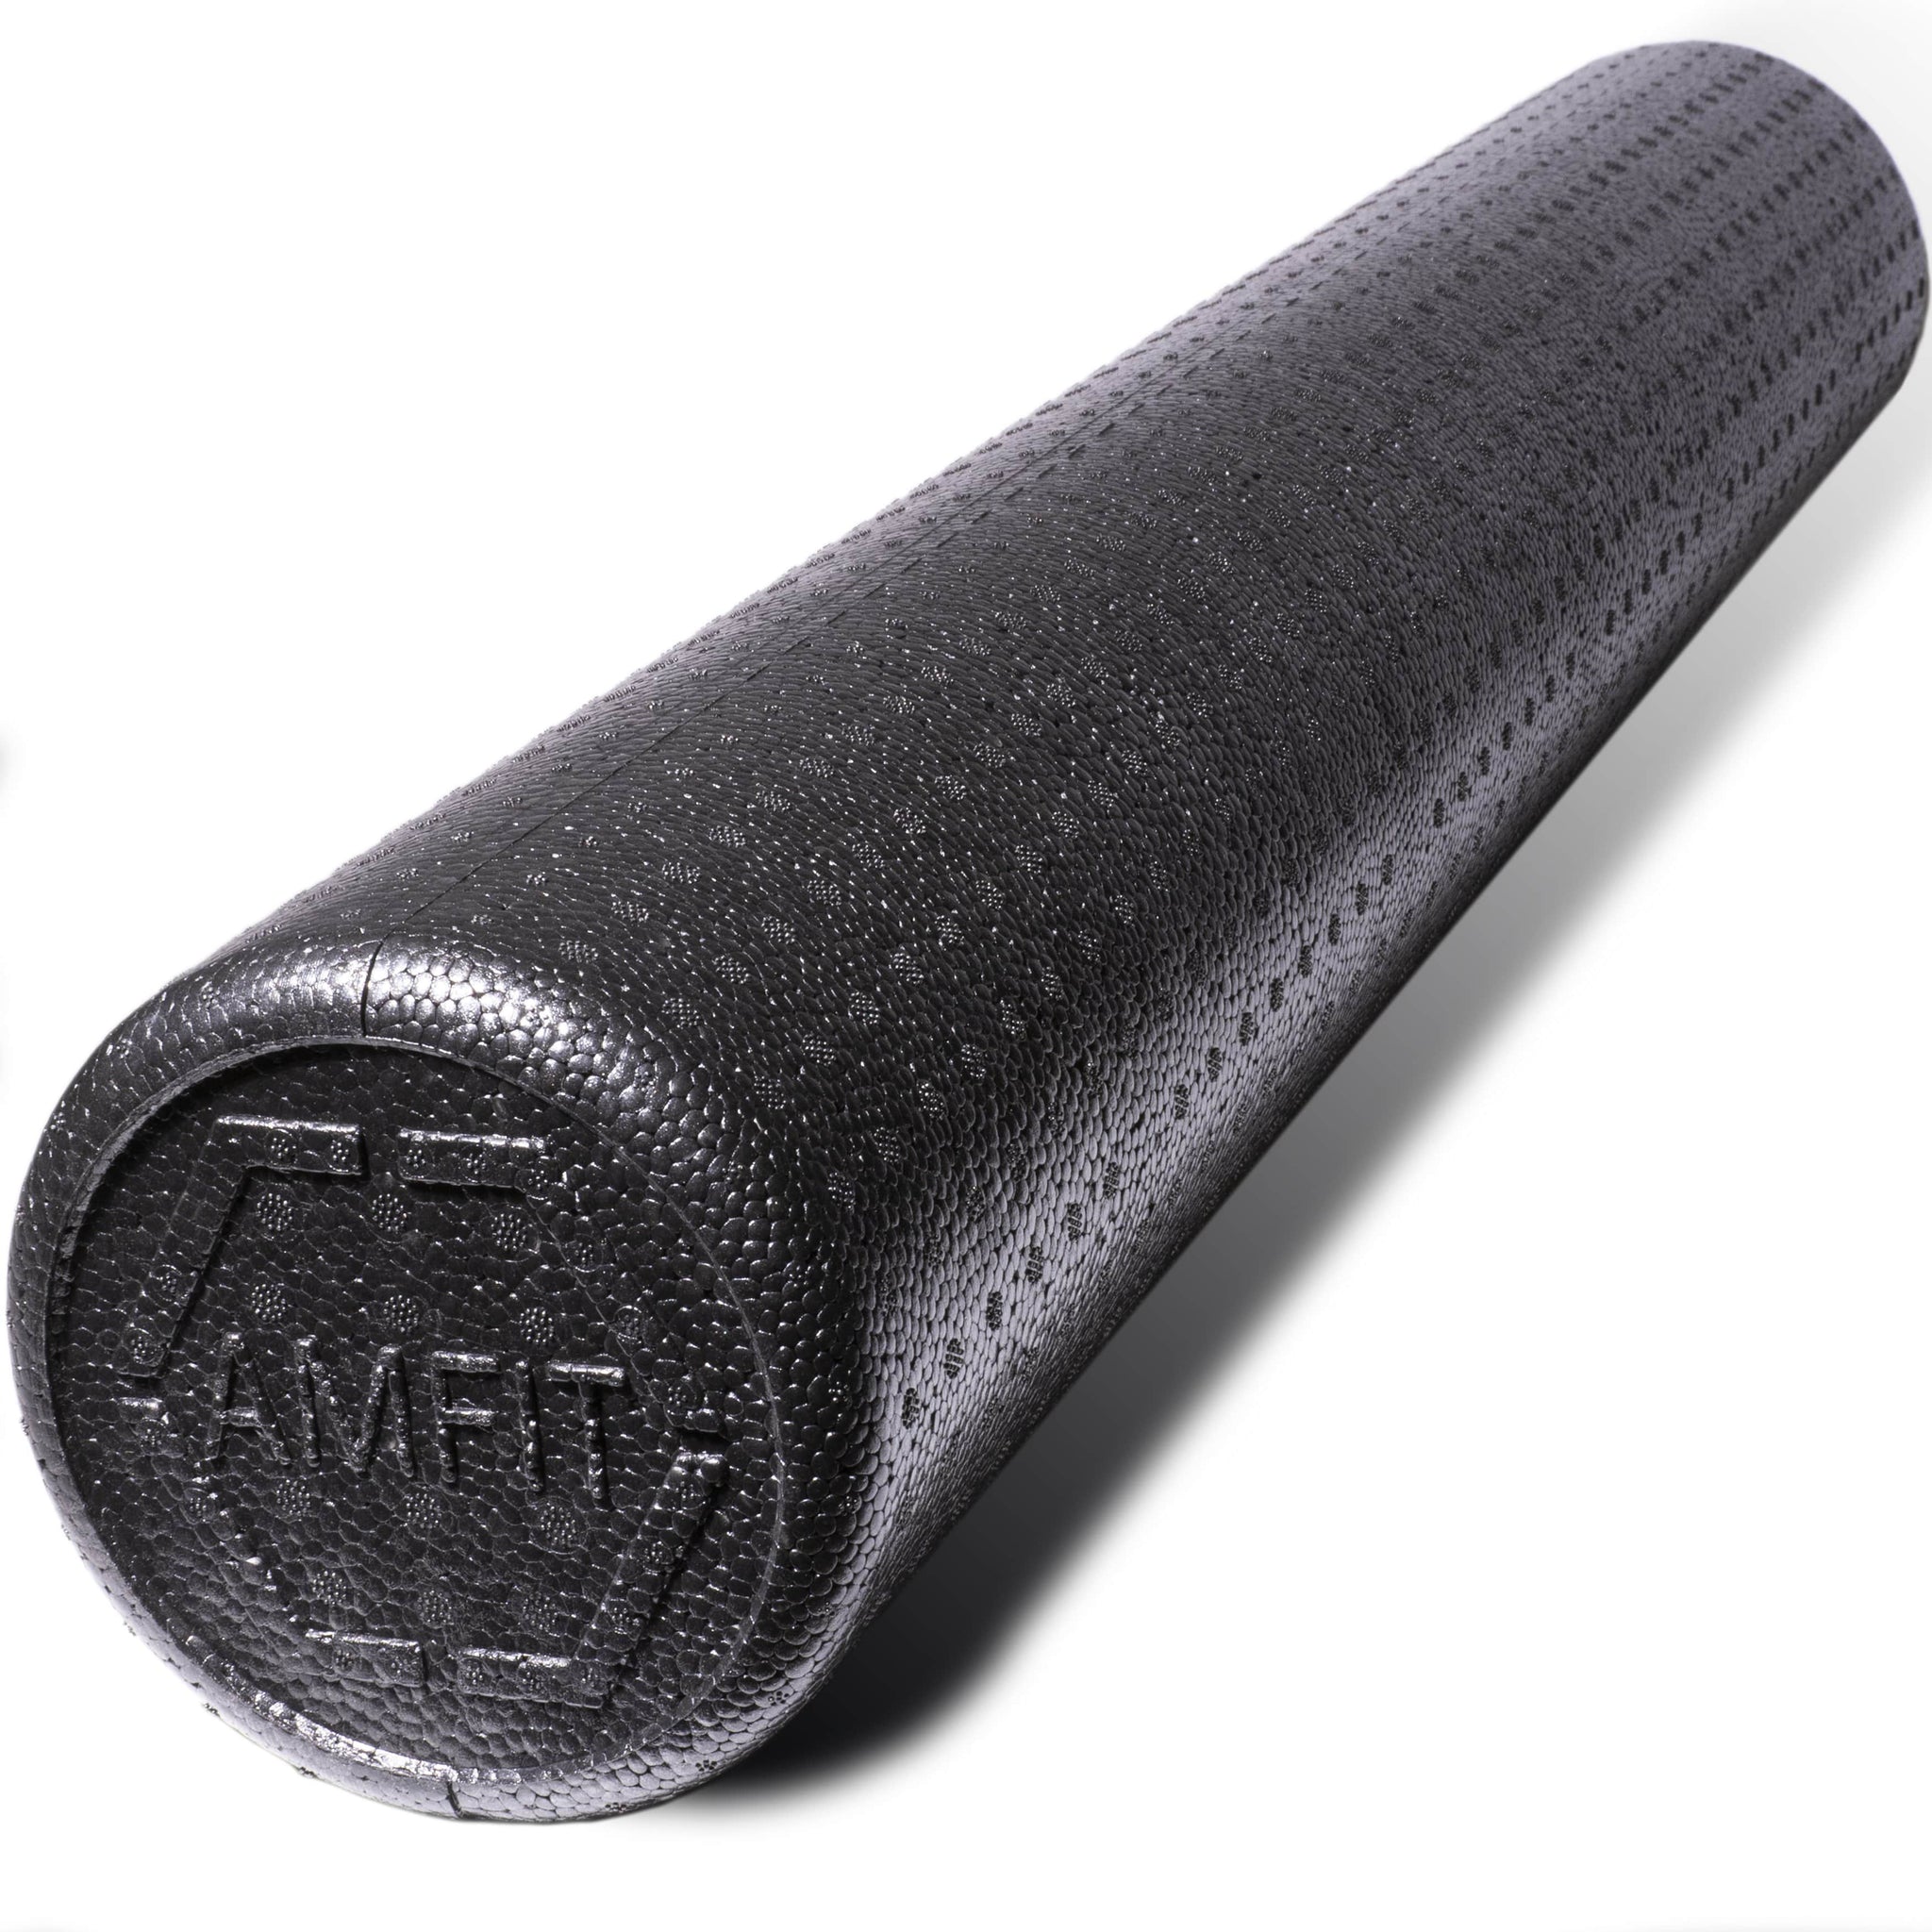 AMFit High-Density Foam Roller